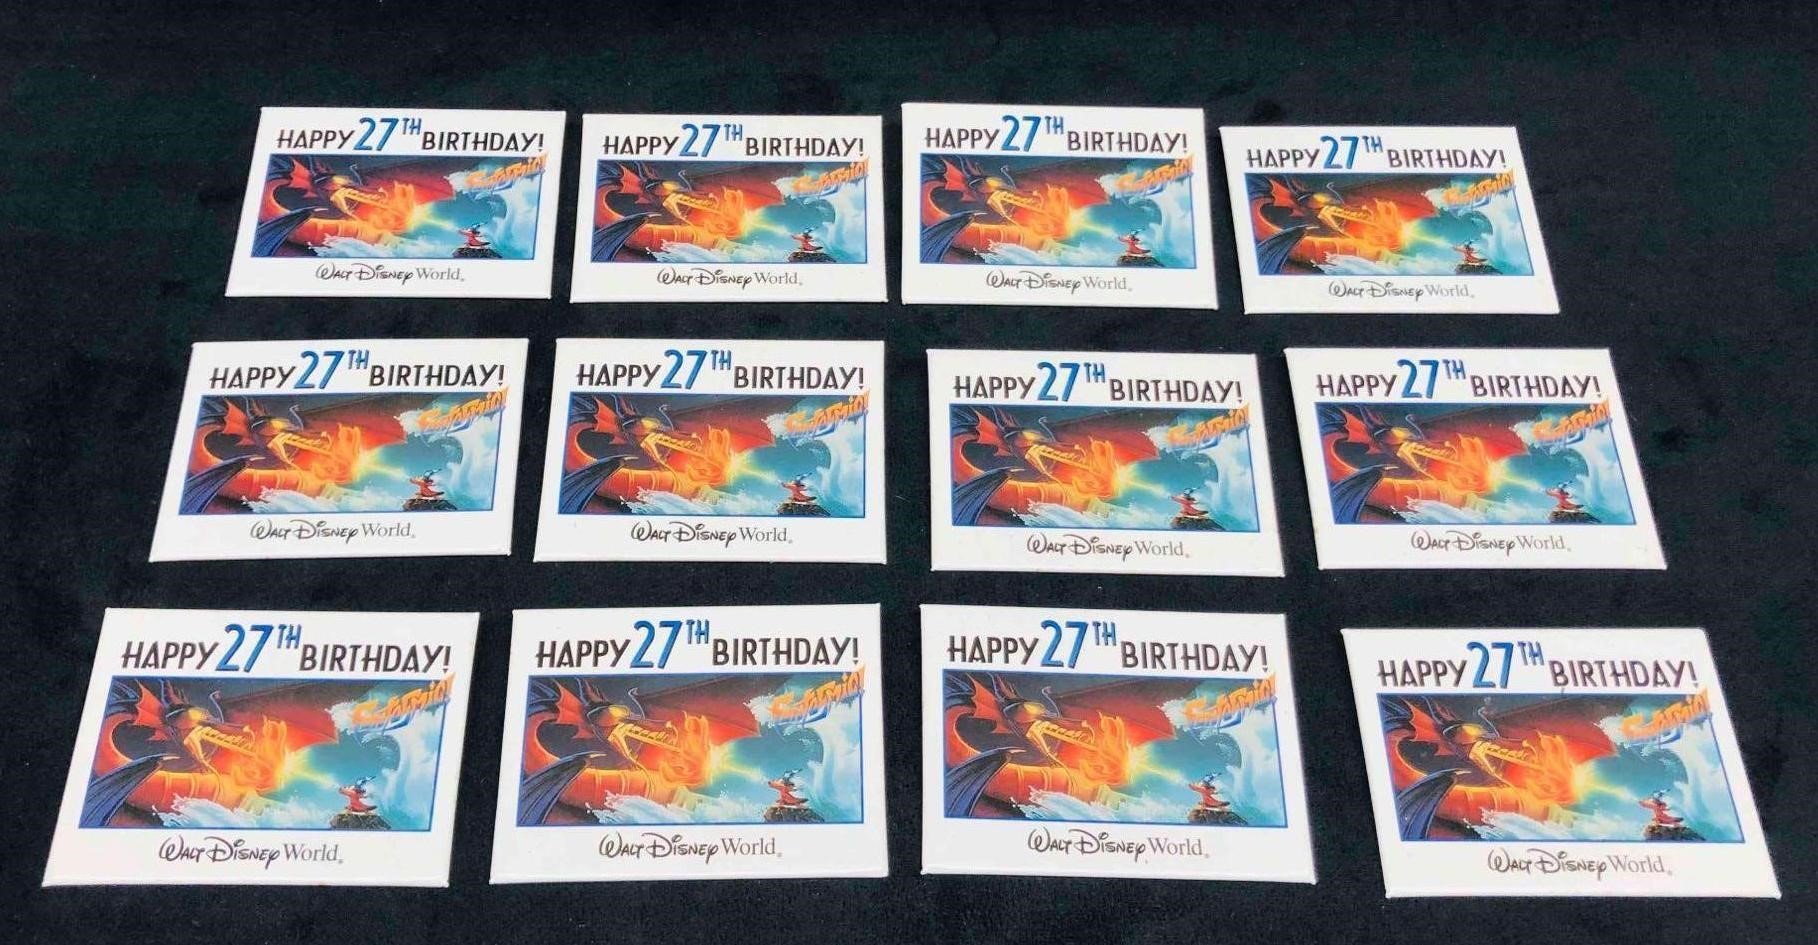 12 "Happy 27th Birthday!" Fantasmic Disney Pins